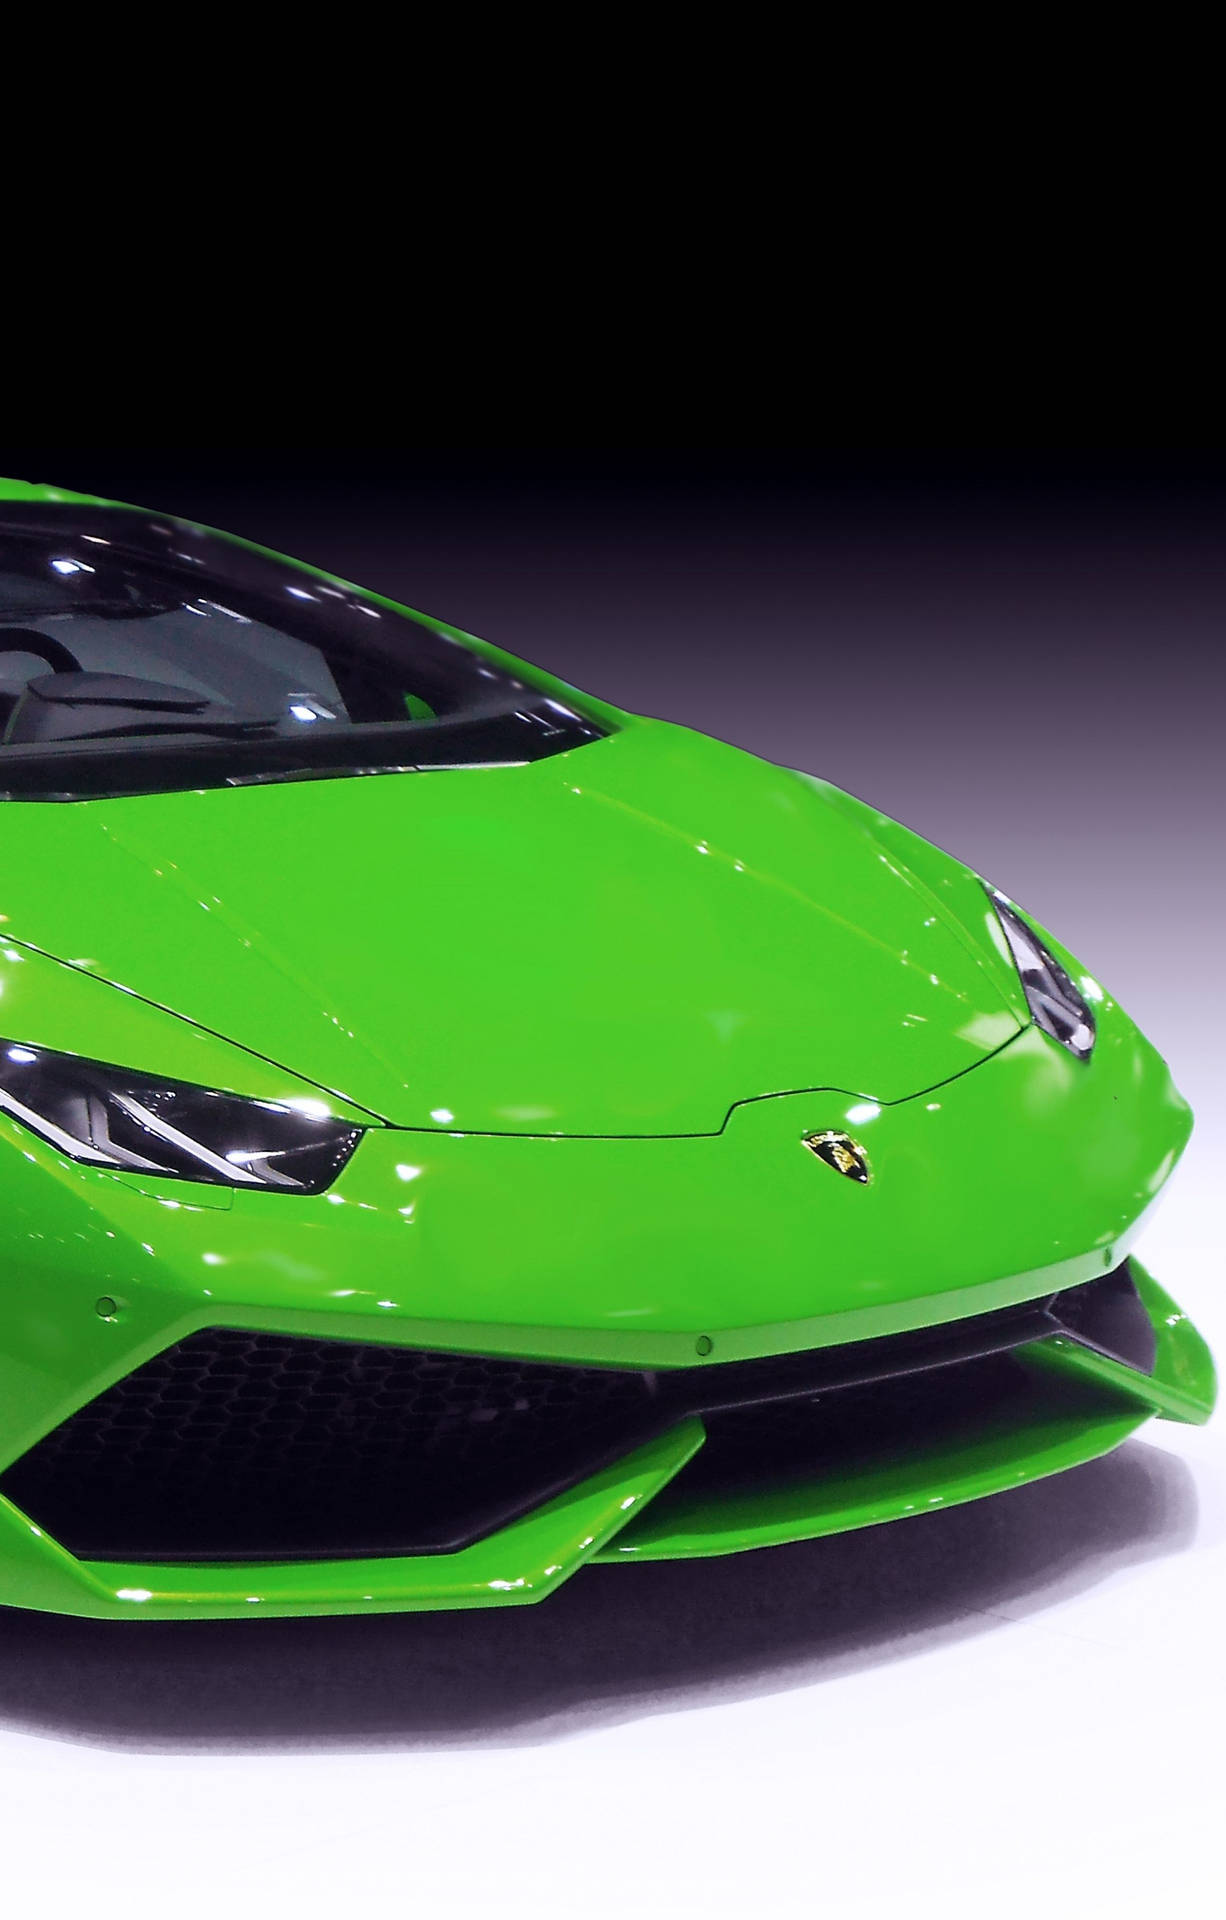 Sientela Velocidad Con Este Lujoso Lamborghini 4k Para Iphone. Fondo de pantalla